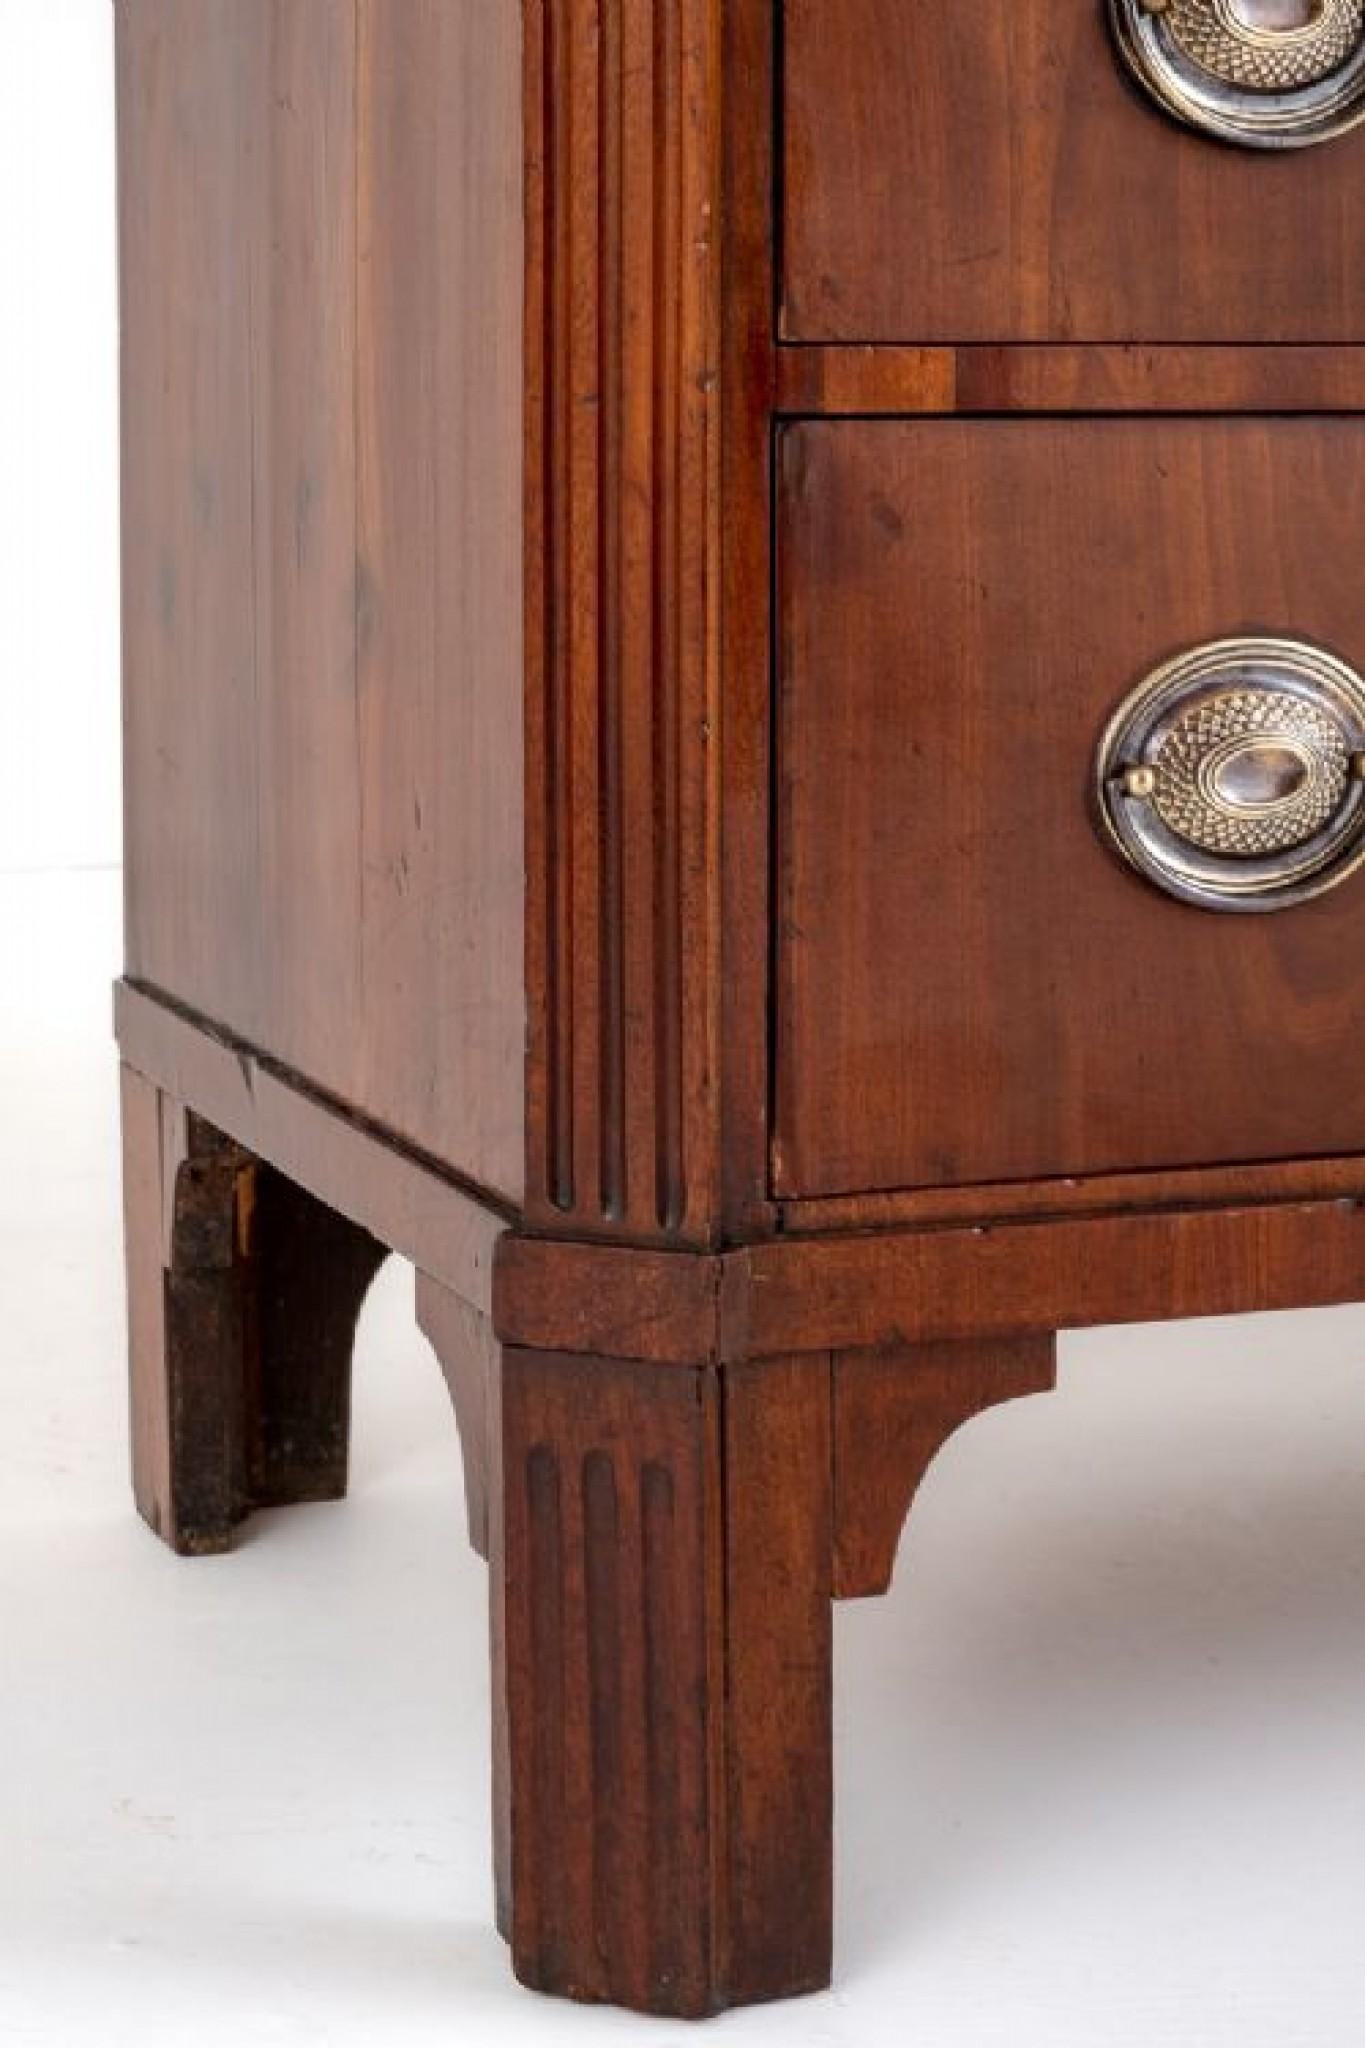 Regency Cylinder Desk Mahogany Furniture, 19th Century For Sale 4